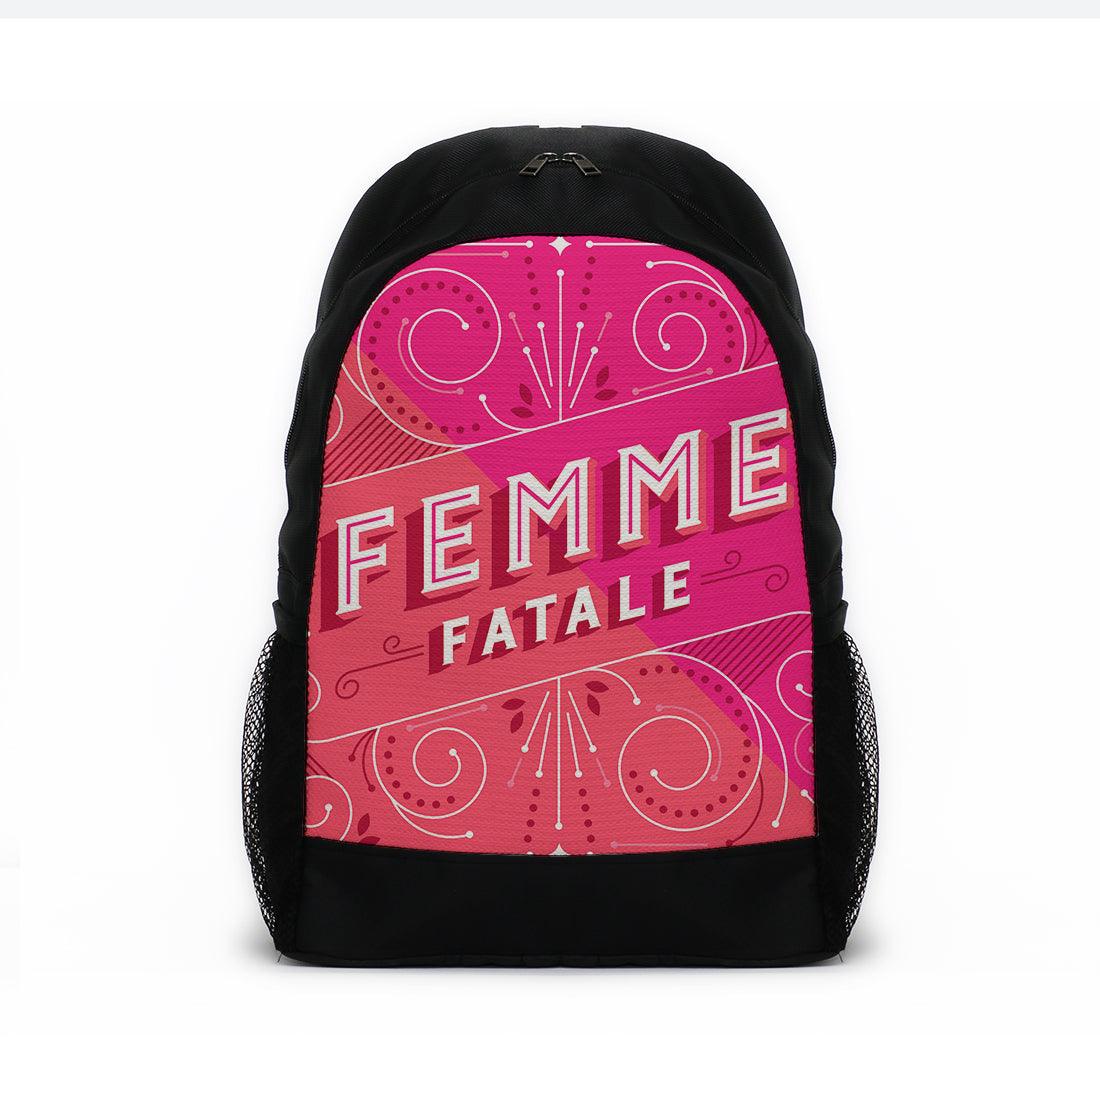 Sports Backpacks Femme fatale - CANVAEGYPT